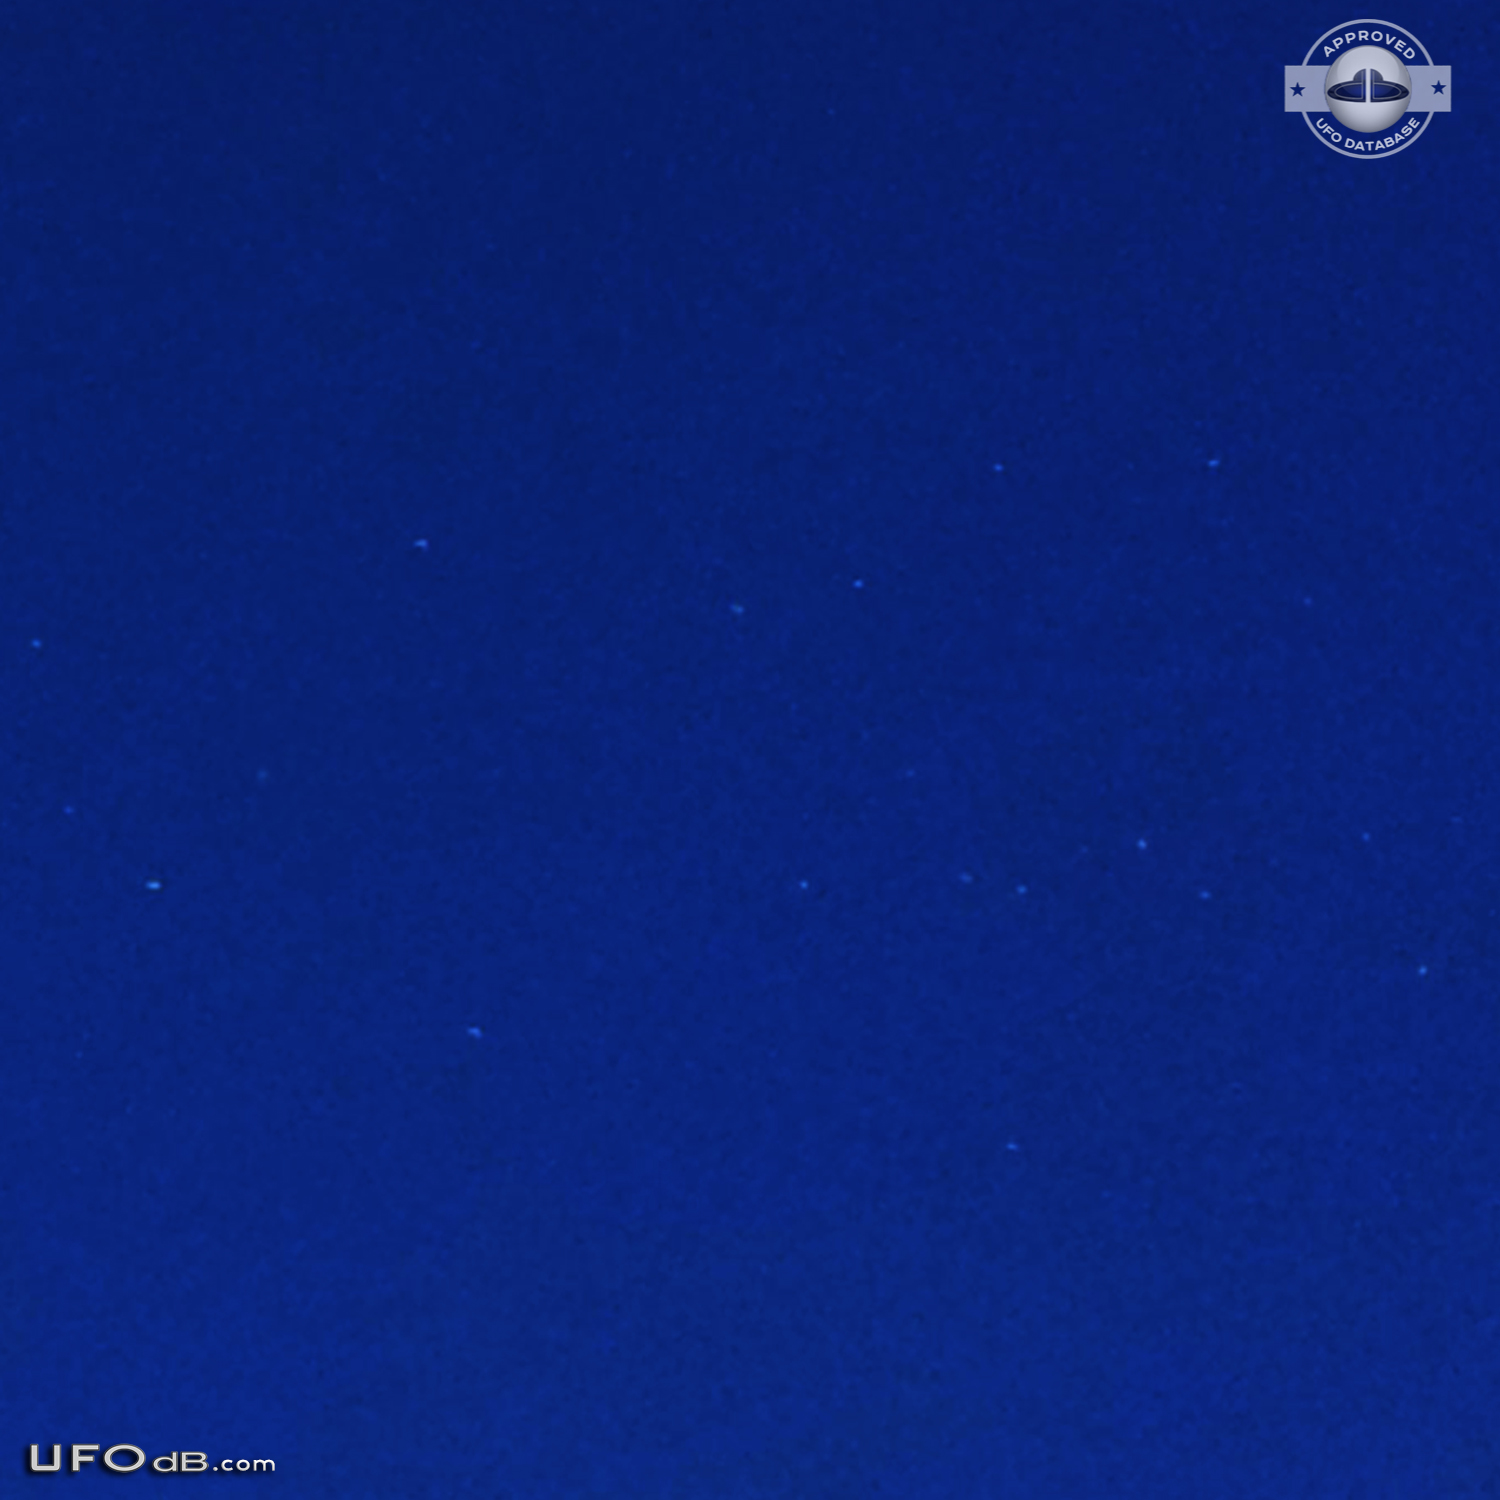 Fleet of UFOs in the blue sky - photo - San Jose, California - 2012 UFO Picture #404-3